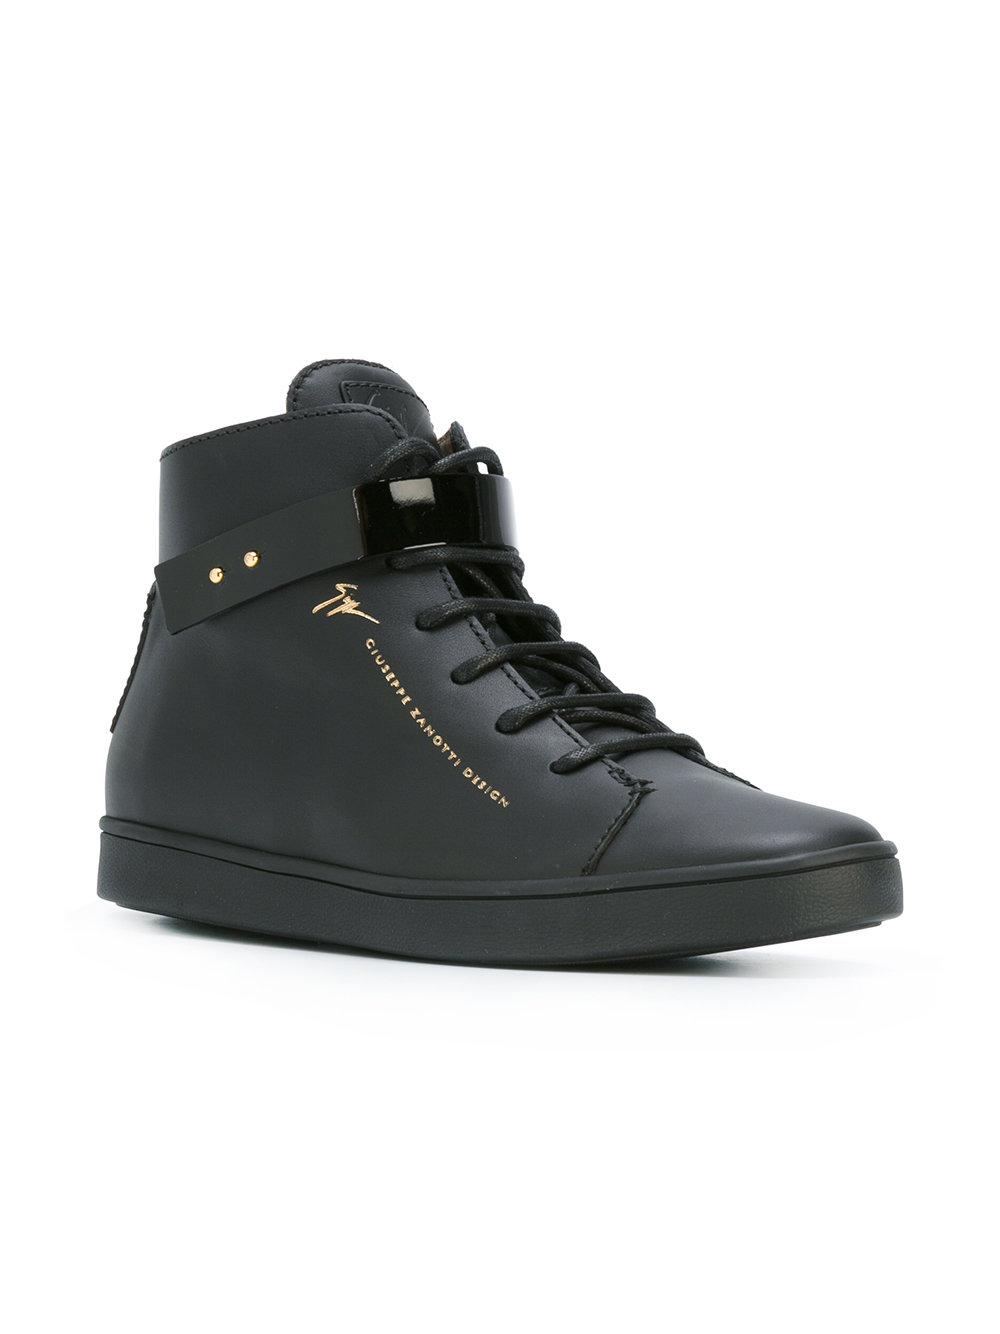 Lyst - Giuseppe Zanotti Signature Hi-top Sneakers in Black